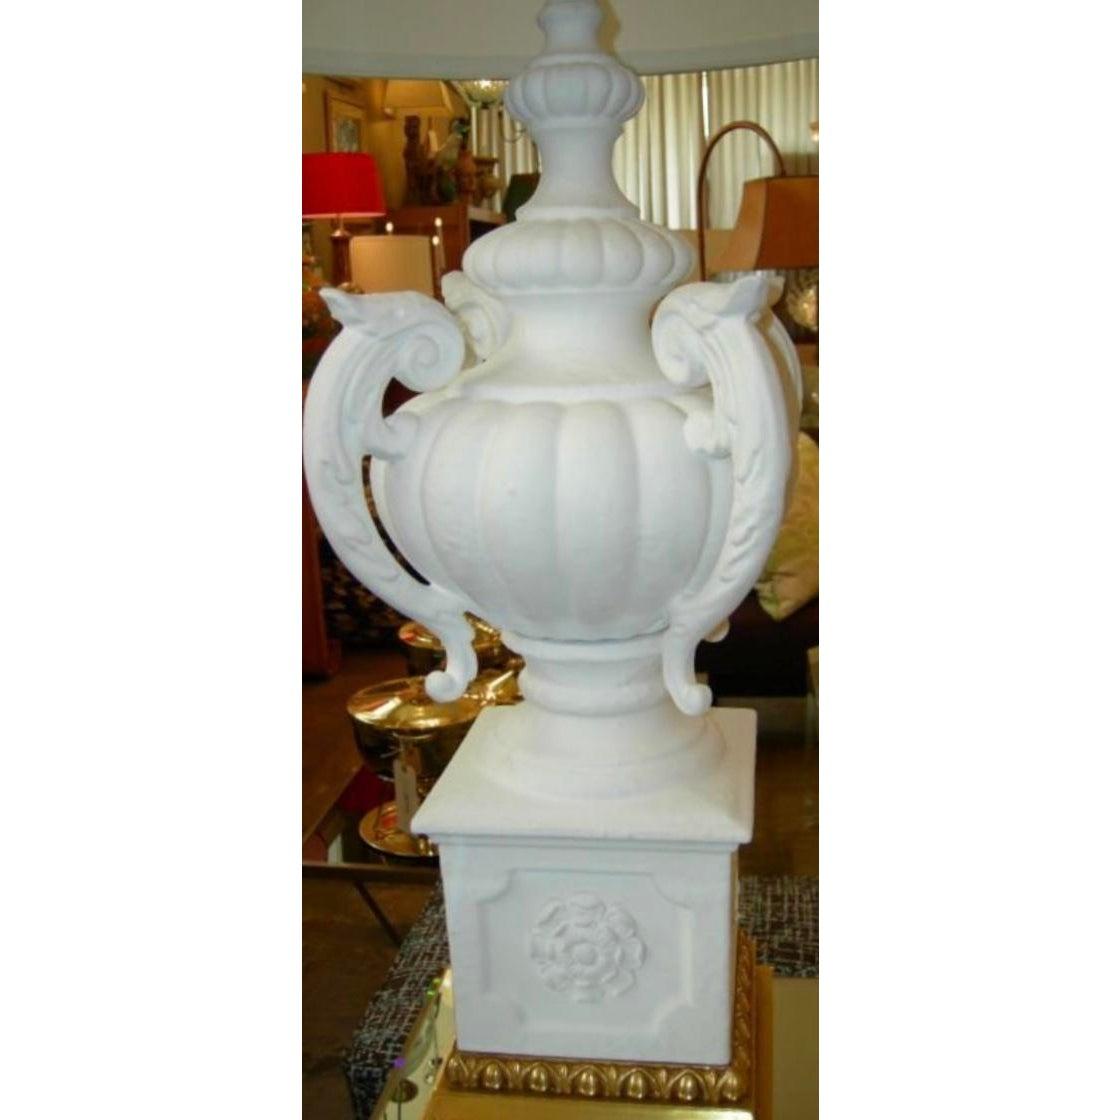 Pair of vintage Hollywood Regency Italian plaster urn form table lamps

Dimensions: 14